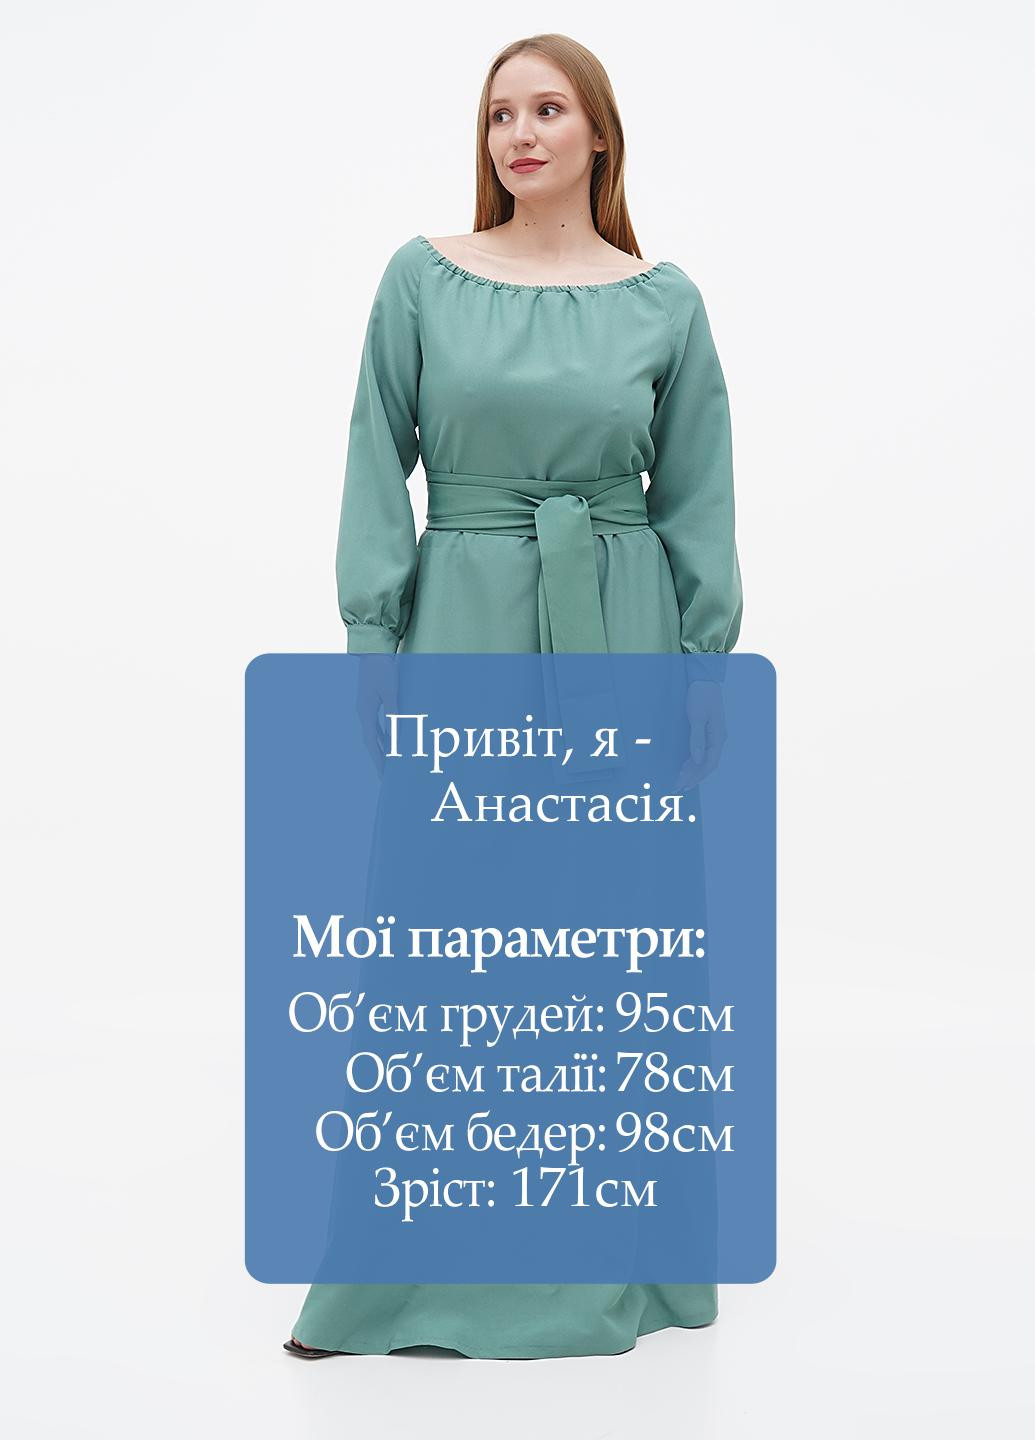 Серо-зеленое кэжуал платье Rebecca Tatti однотонное